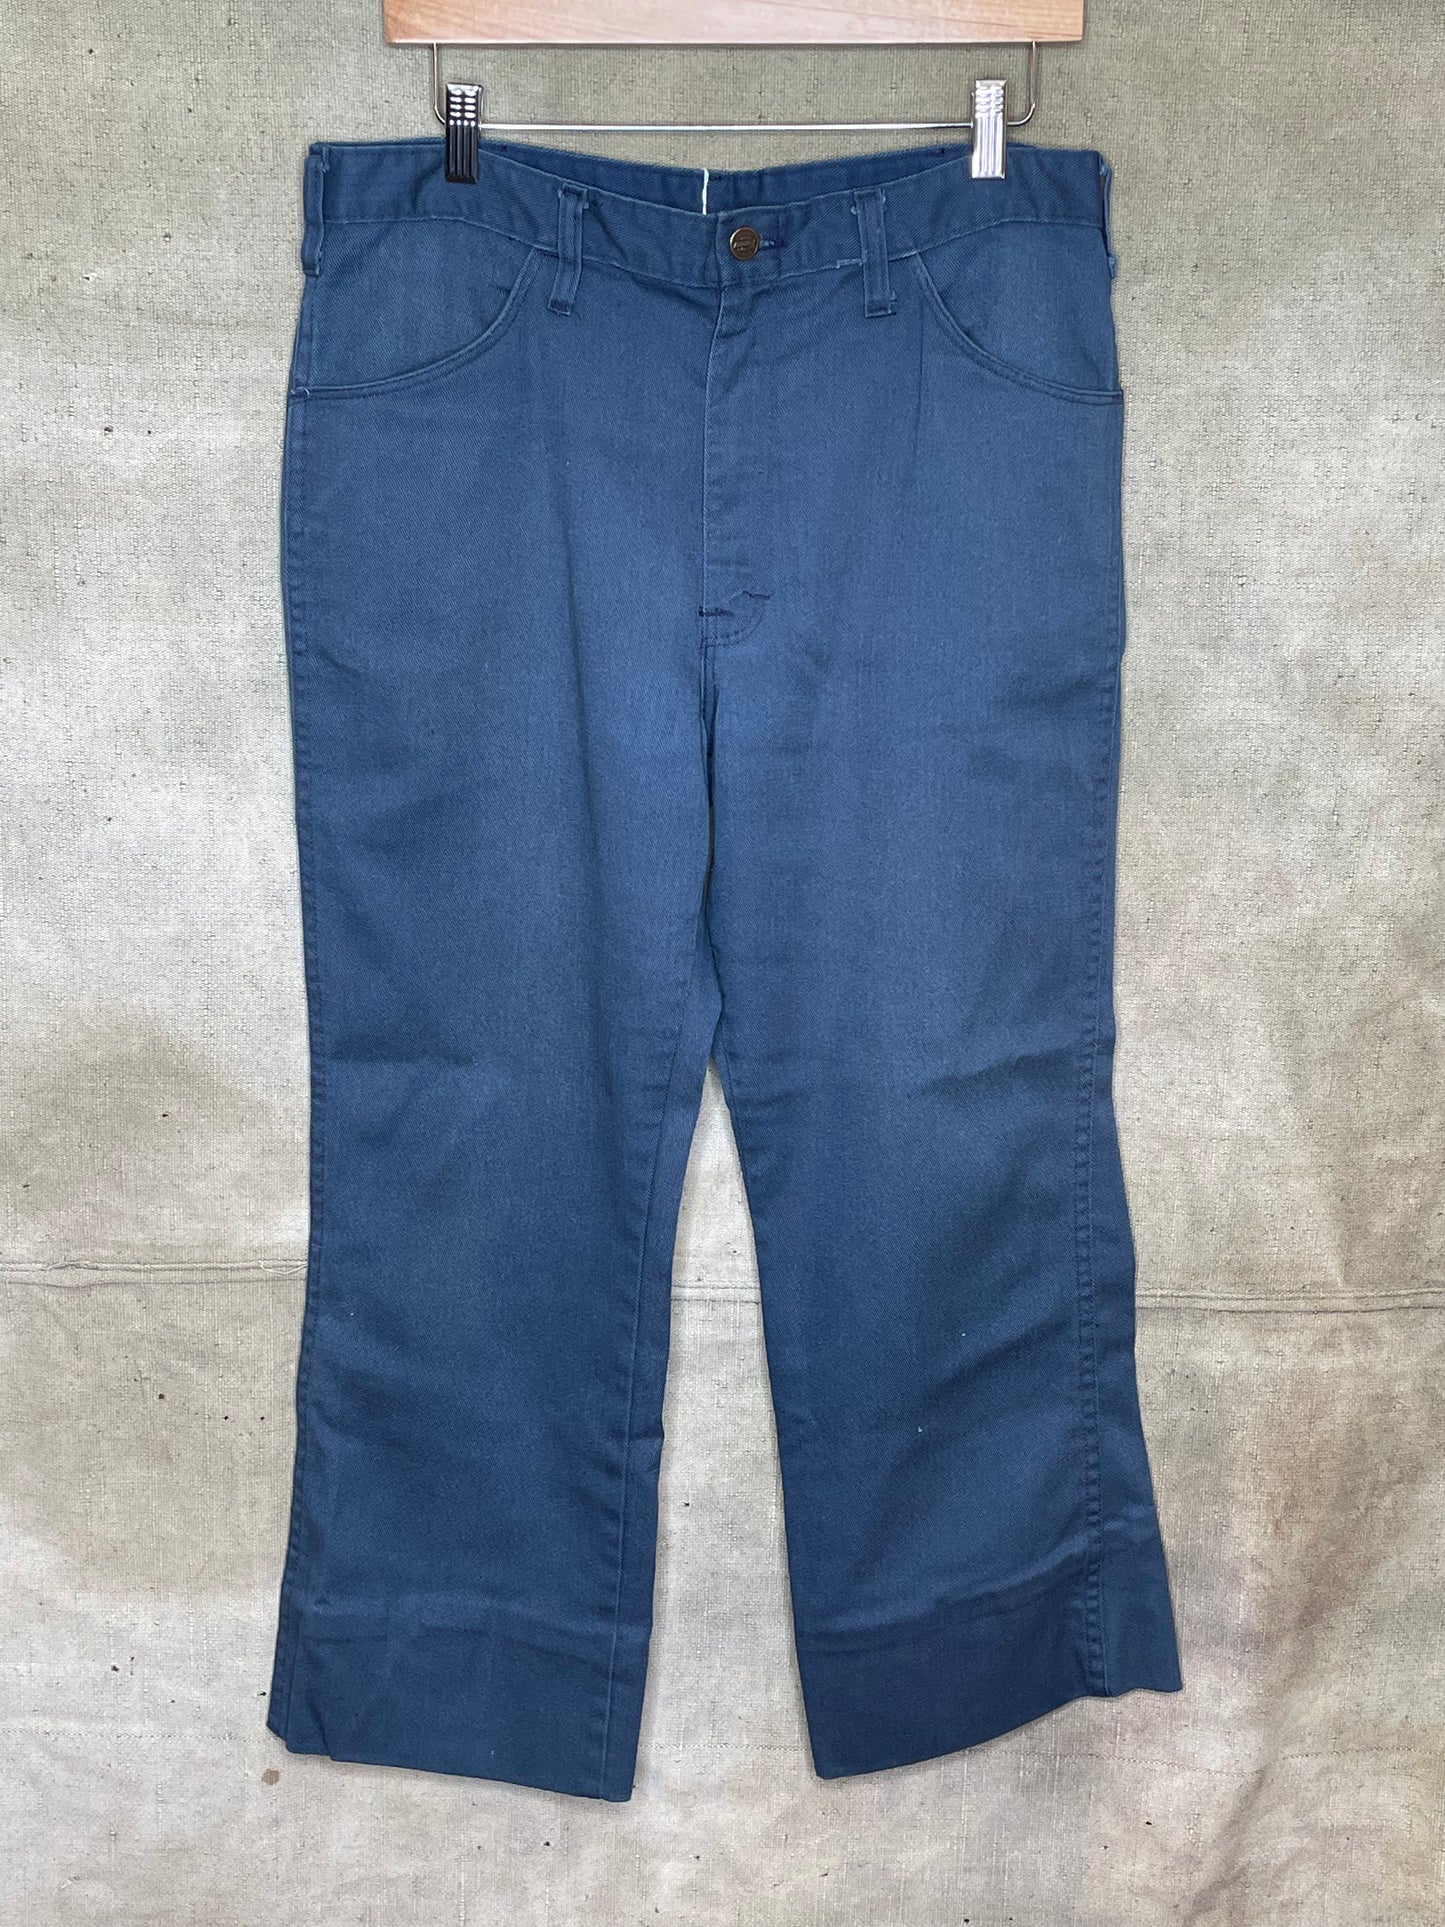 Vintage Dickies Work Wear USA Made Pants W34 L26